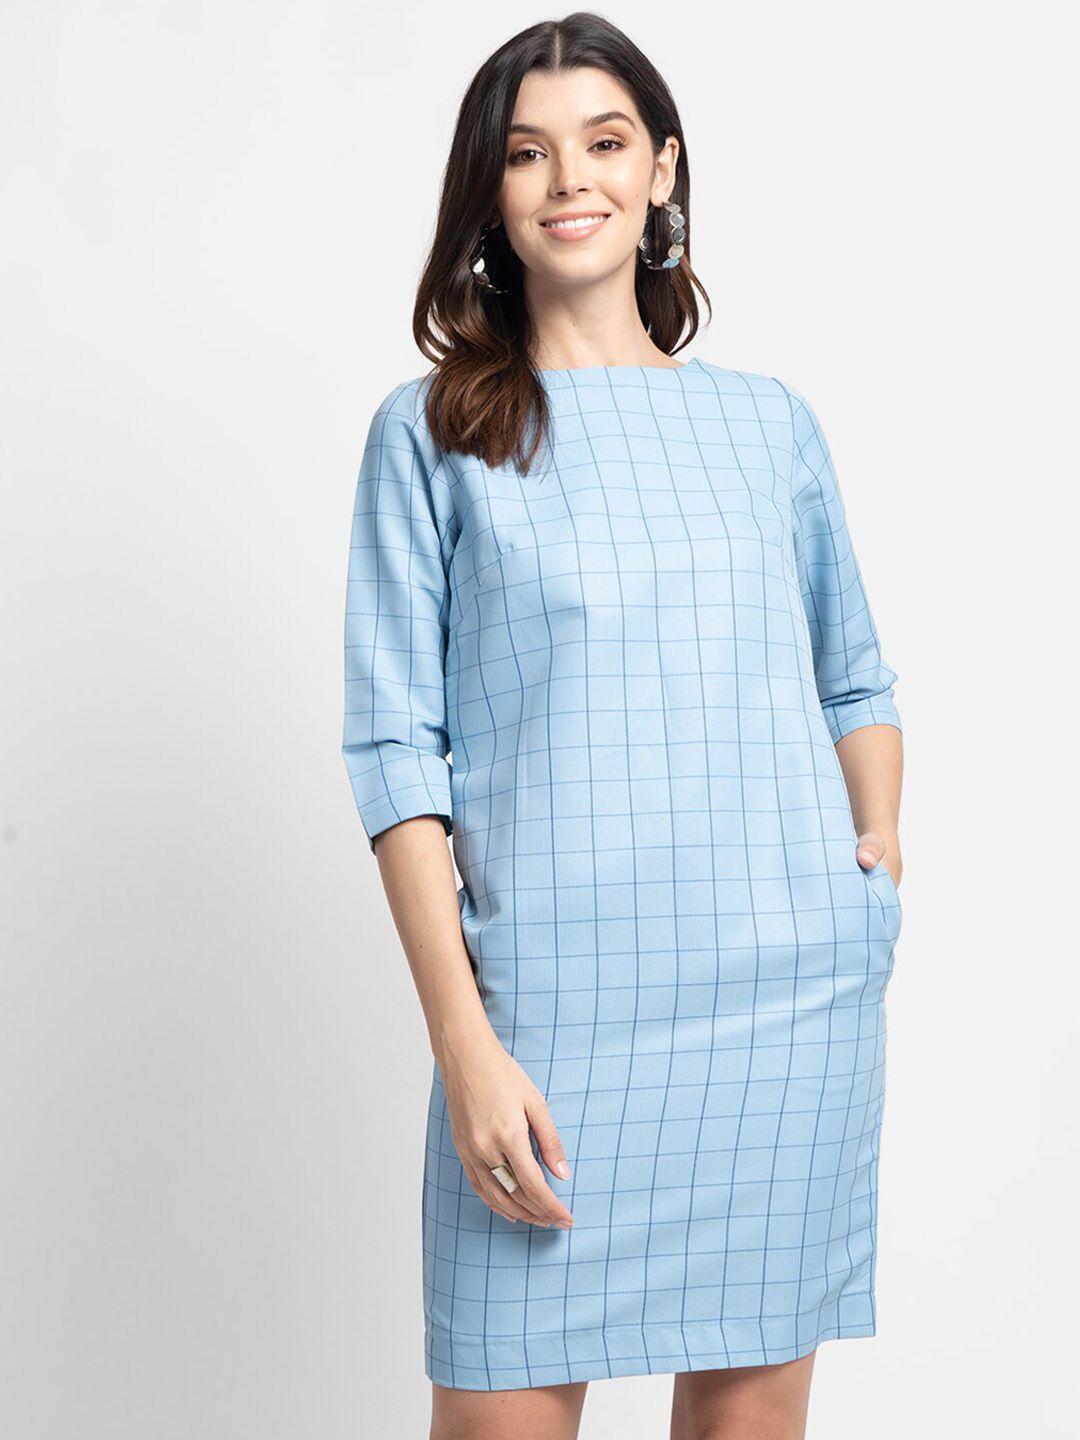 powersutra-women-blue-checked-cotton-sheath-dress